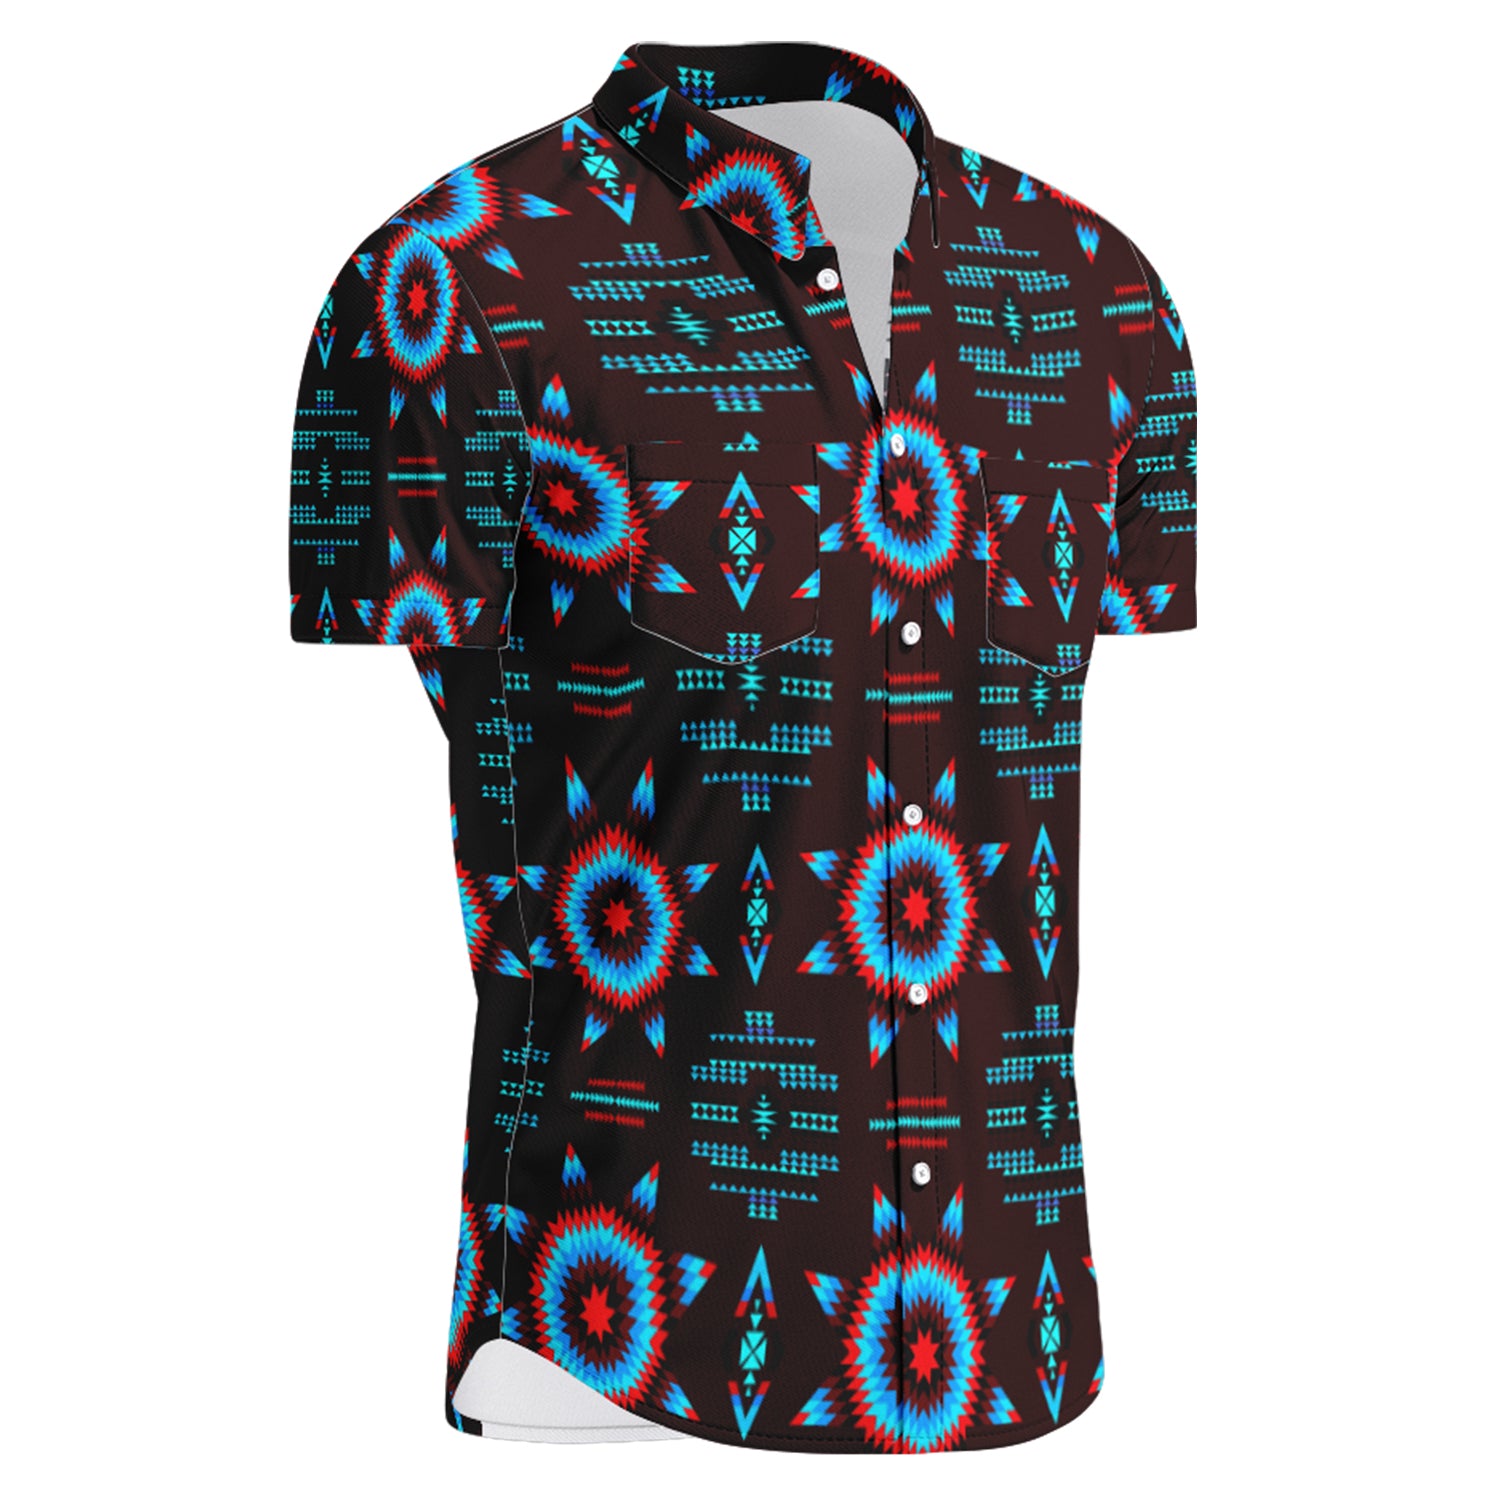 Rising Star Hawaiian-Style Button Up Shirt